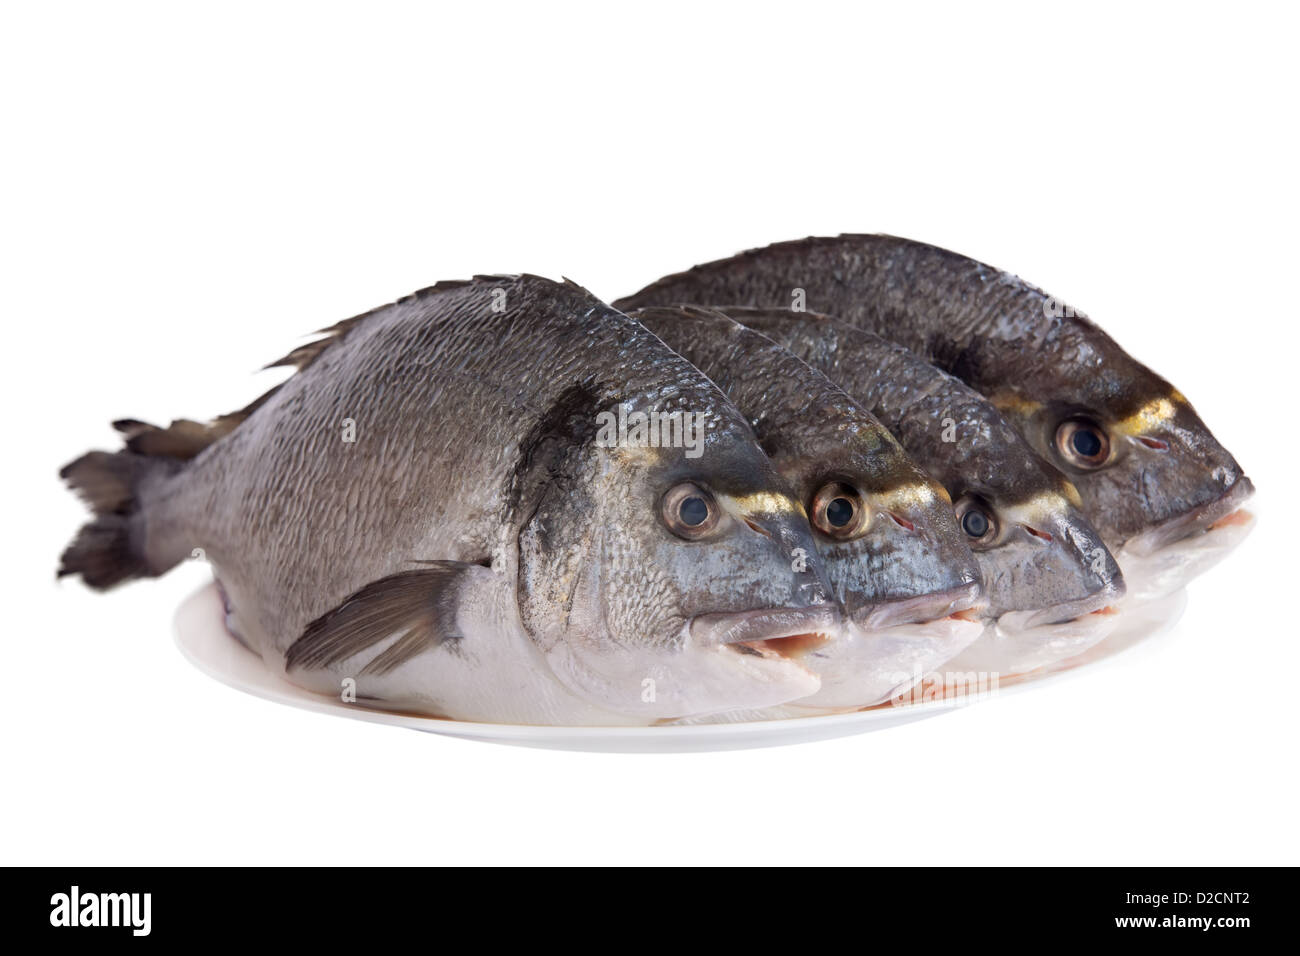 Four dorado fish on white dish isolated on white background Stock Photo